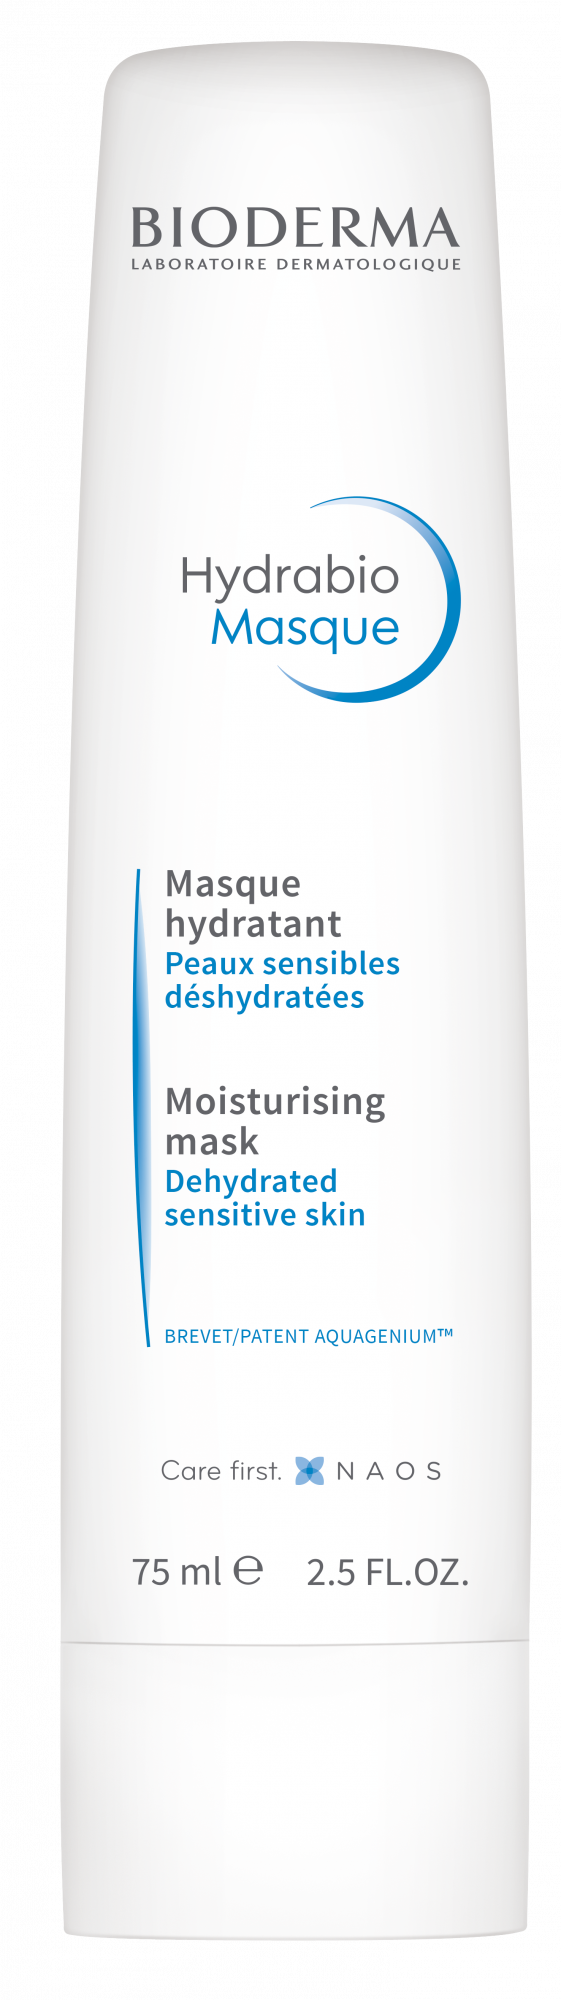 Hydrabio Mask | Moisturizing mask for sensitive, skin